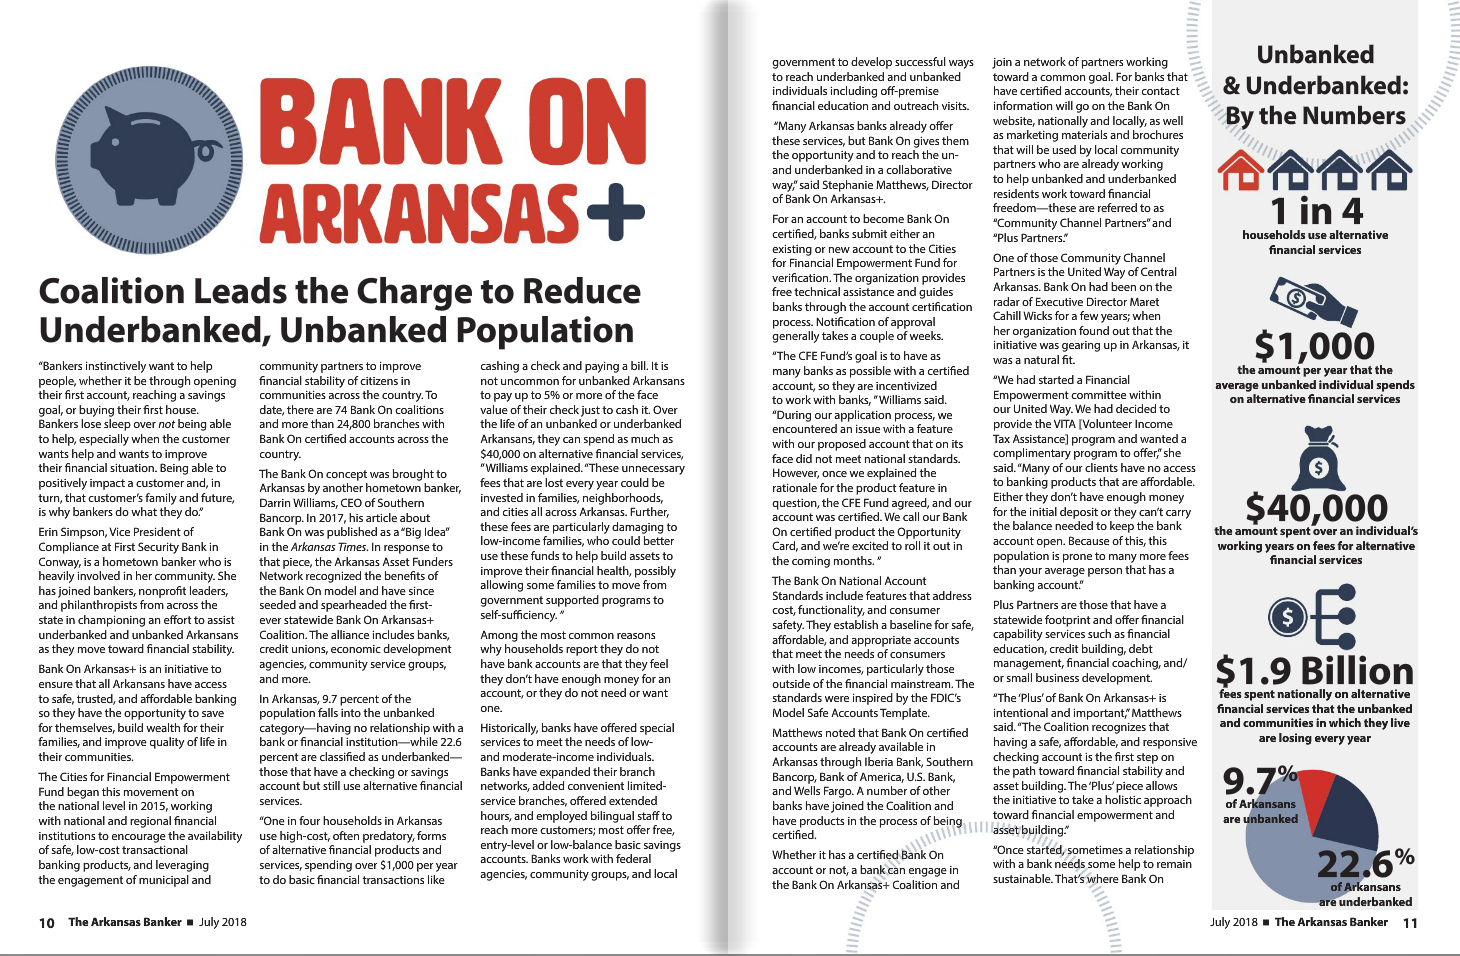 Arkansas Banker – July 2018 Article